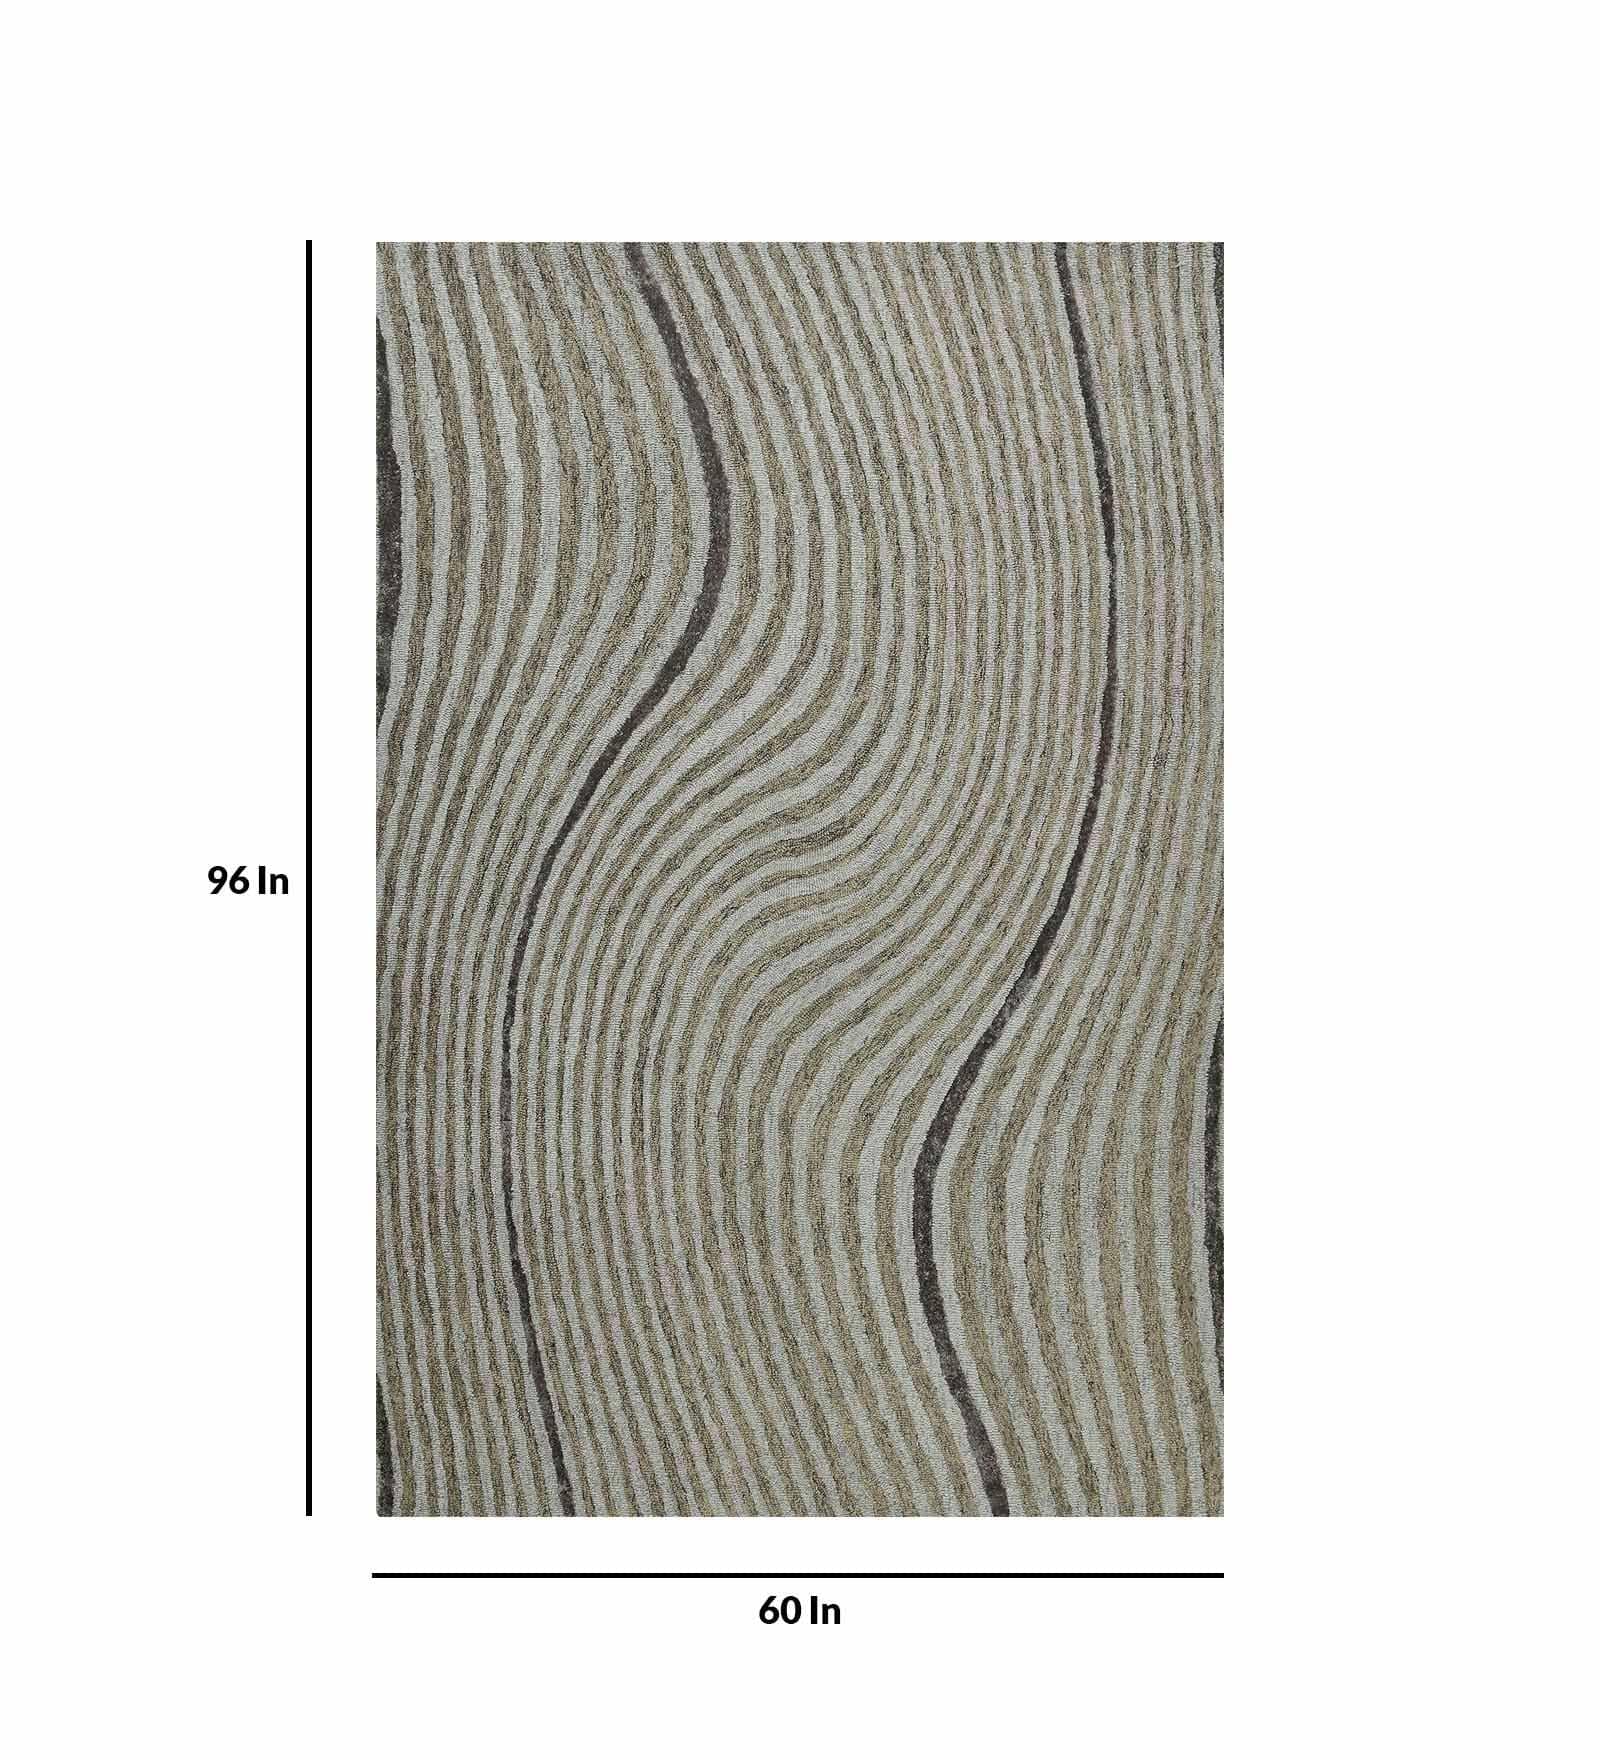 IRON Wool & Viscose Canyan 5x8 Feet  Hand-Tufted Carpet - Rug